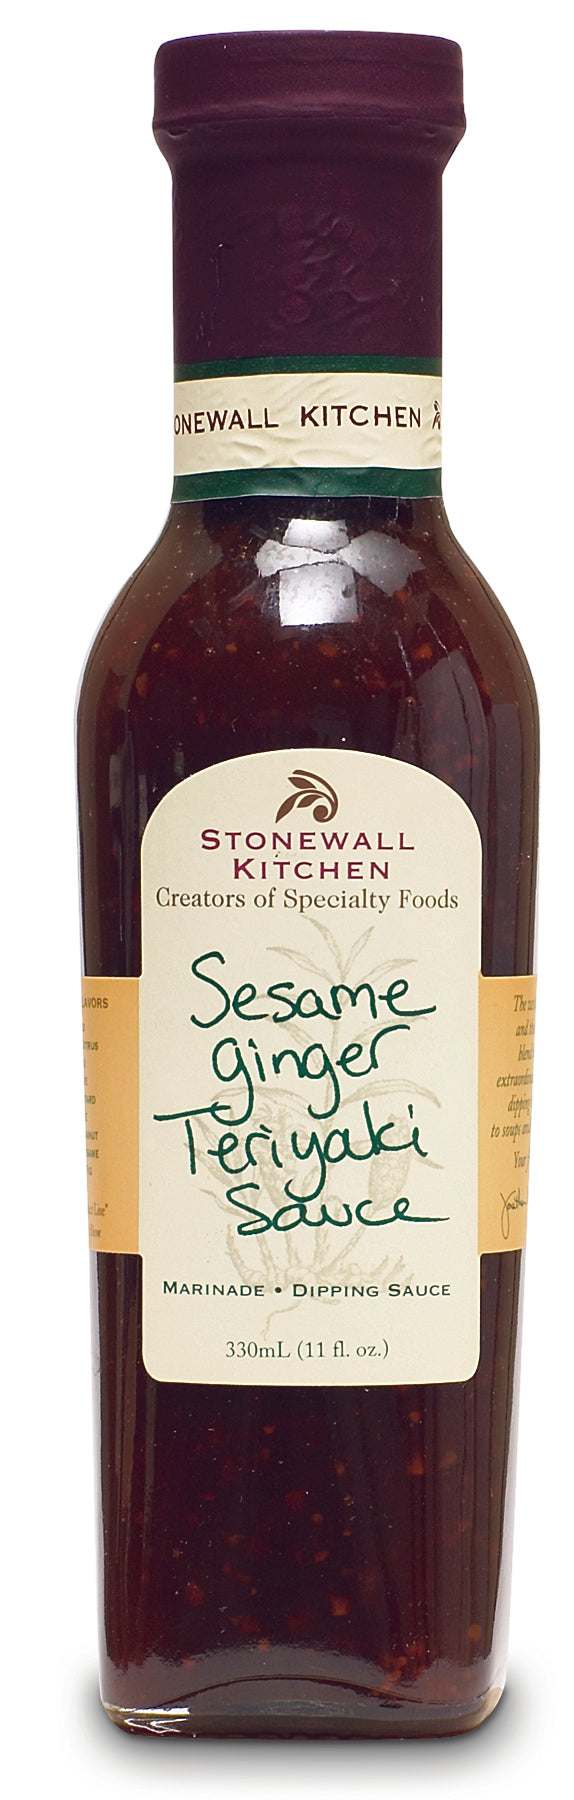 Stonewall Sesame Ginger Teriyaki Sauce 330 ml